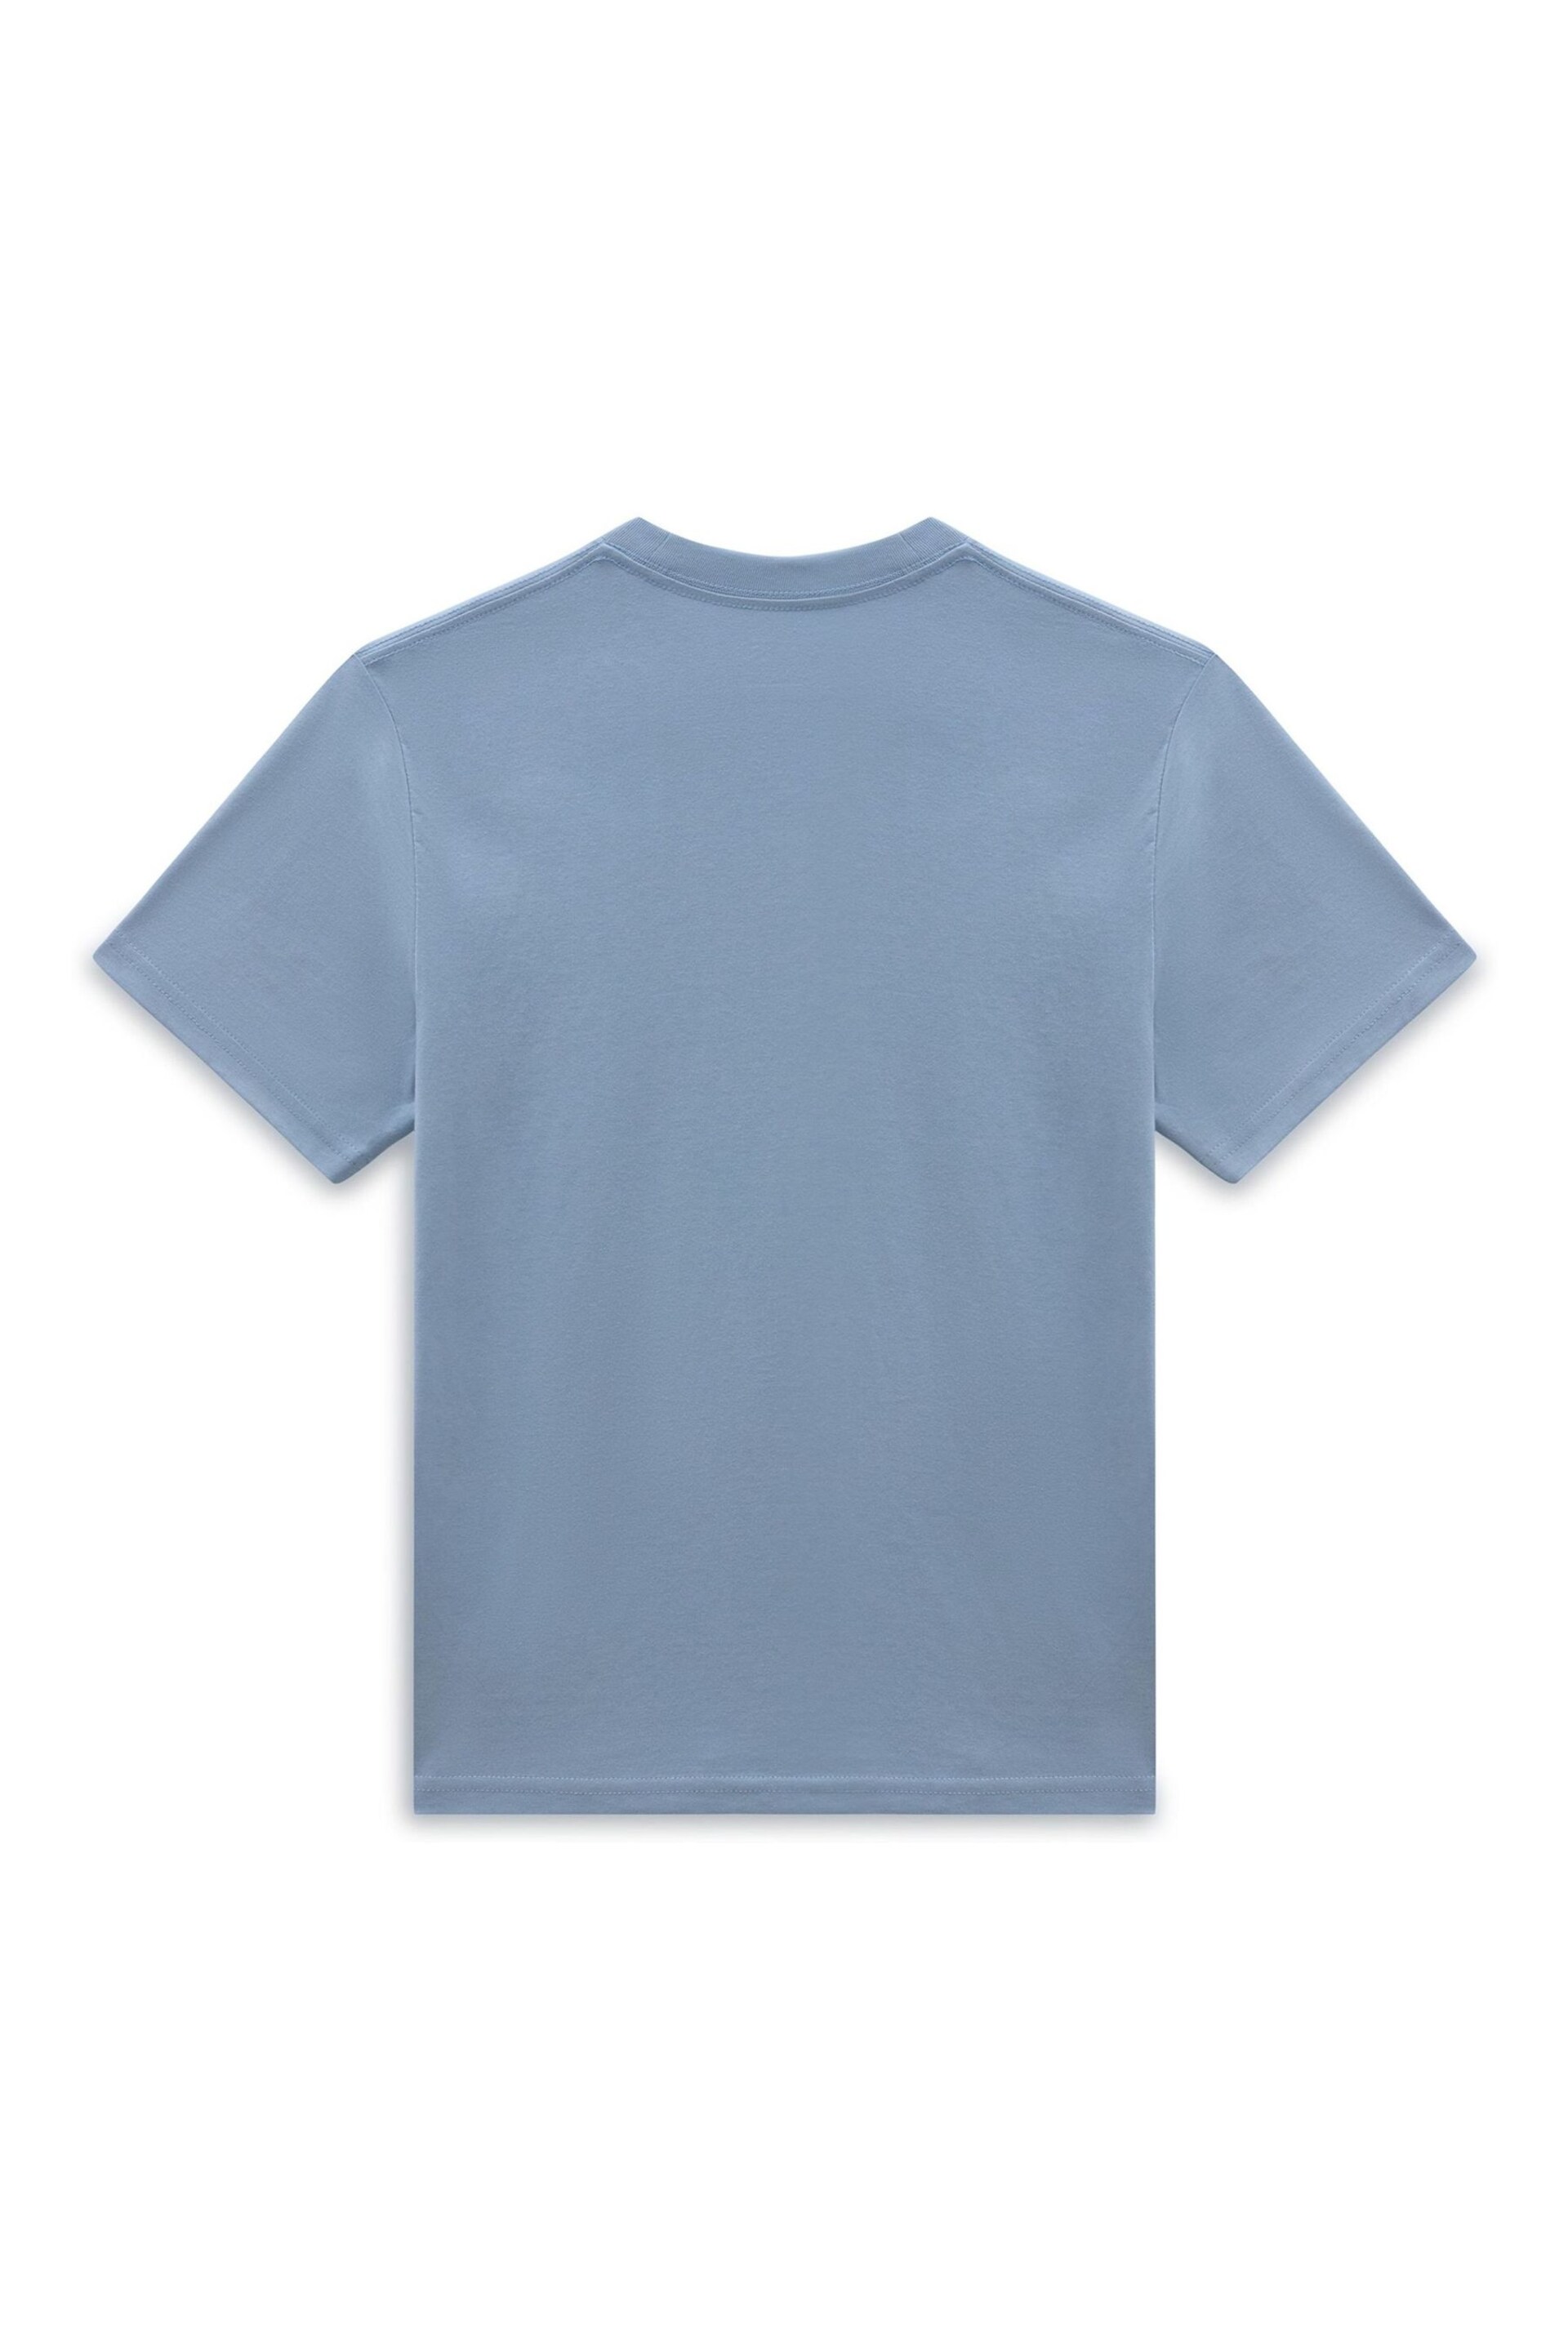 Vans Boys Navy Print Box T-Shirt - Image 2 of 2